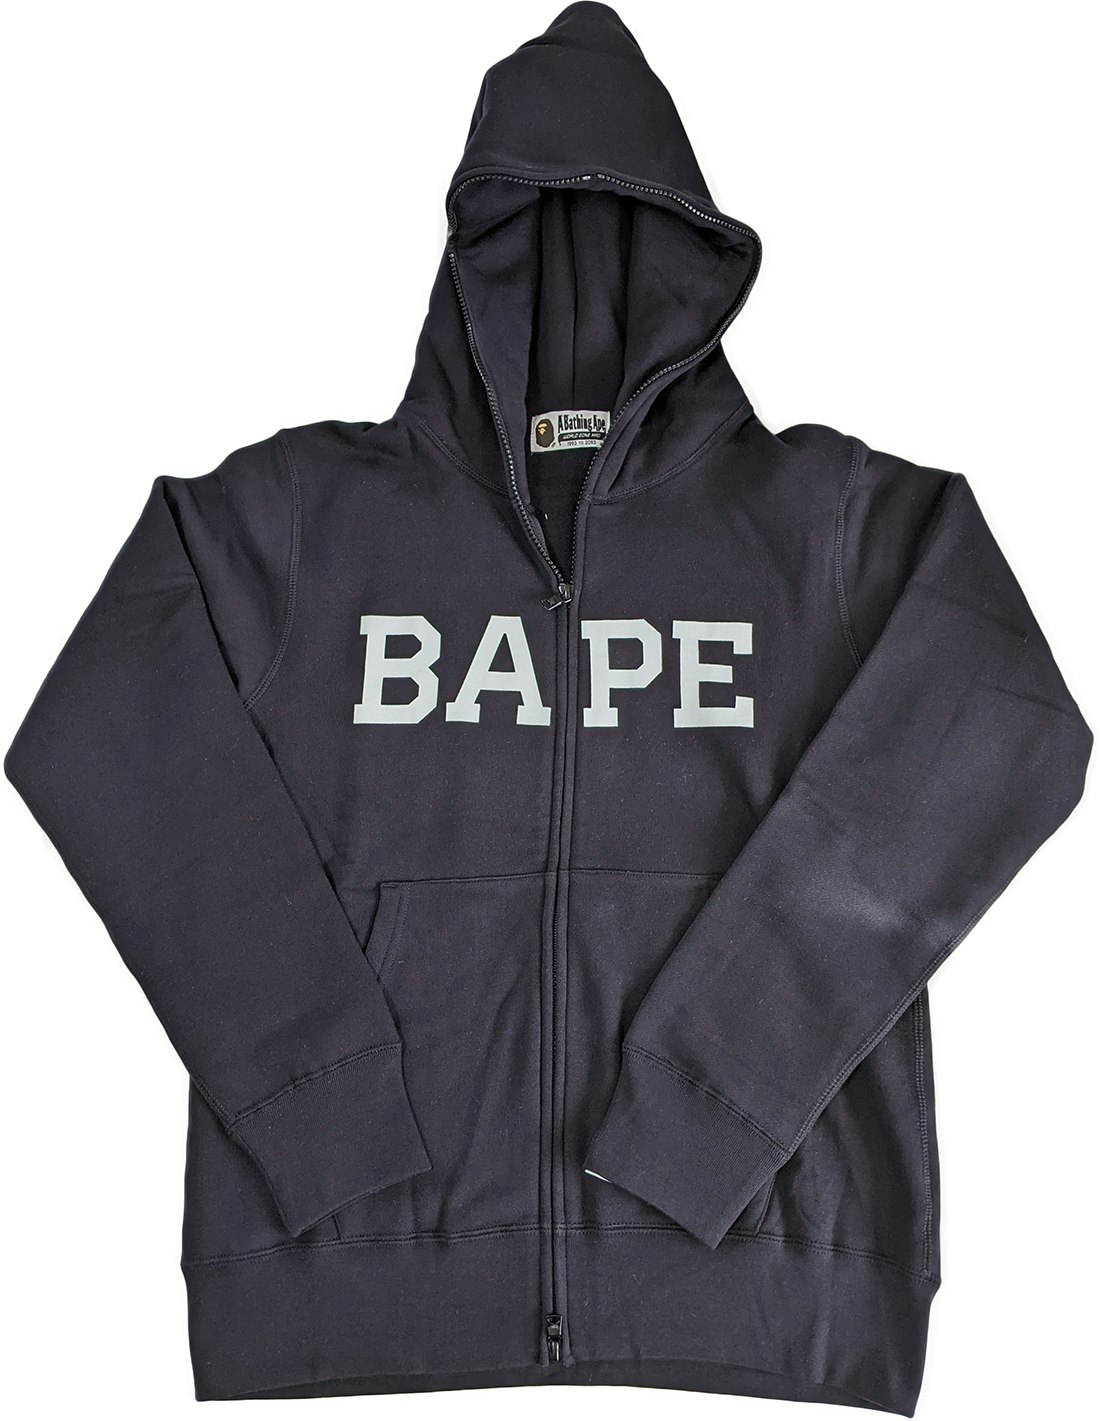 BAPE New Year 2021 Premium Zip Hoodie Black - Novelship